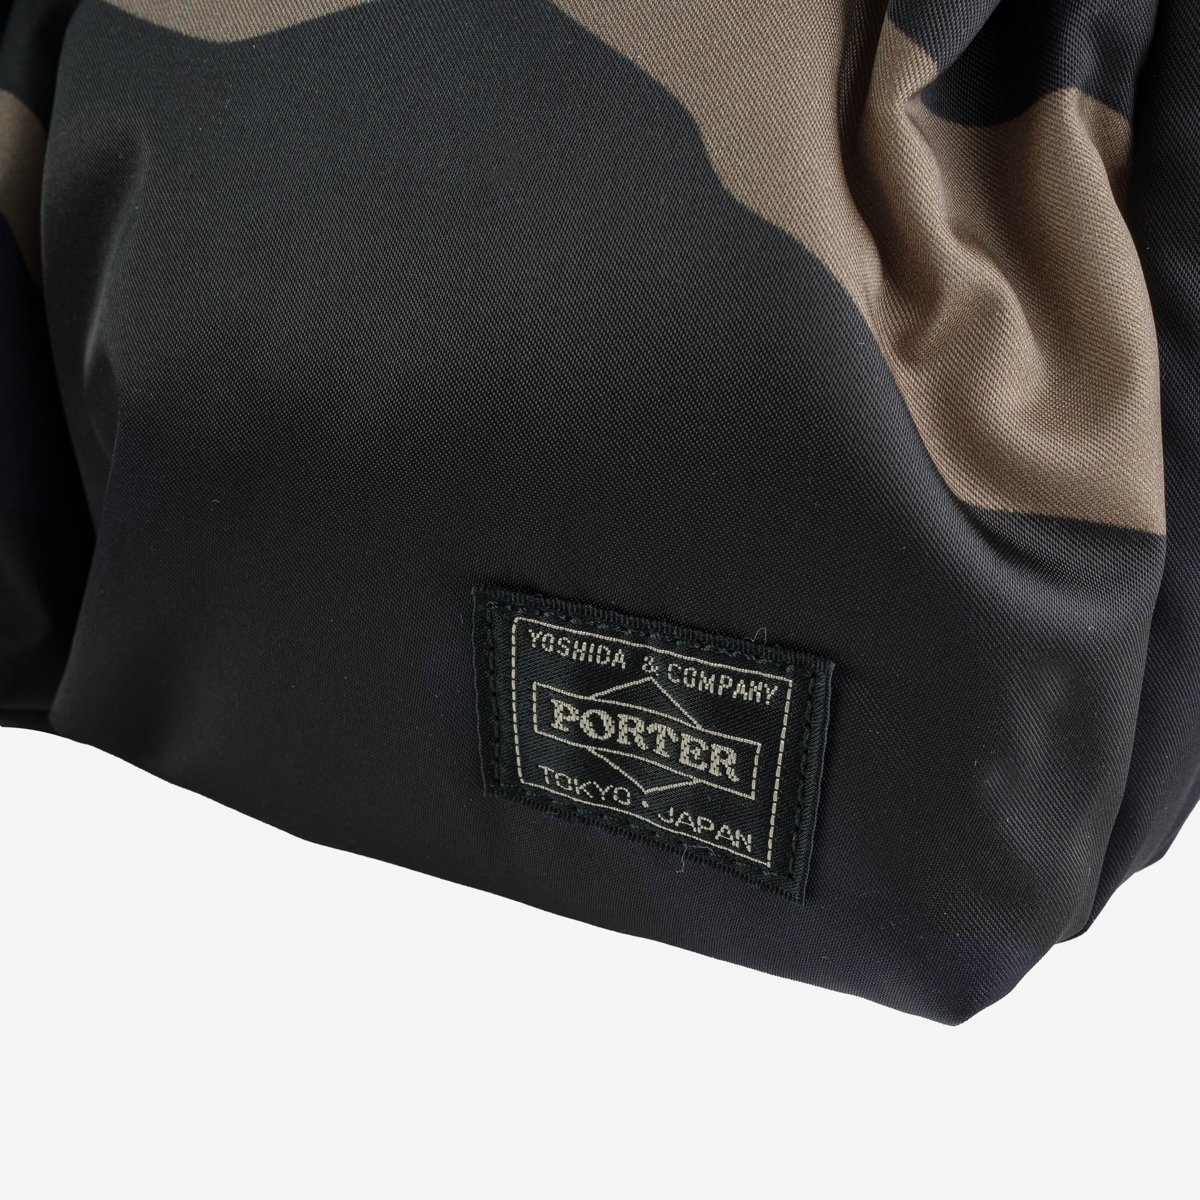 POR-SHLDR-CAM Porter - Yoshida & Co. - Counter Shade Shoulder Bag - Camo - 9